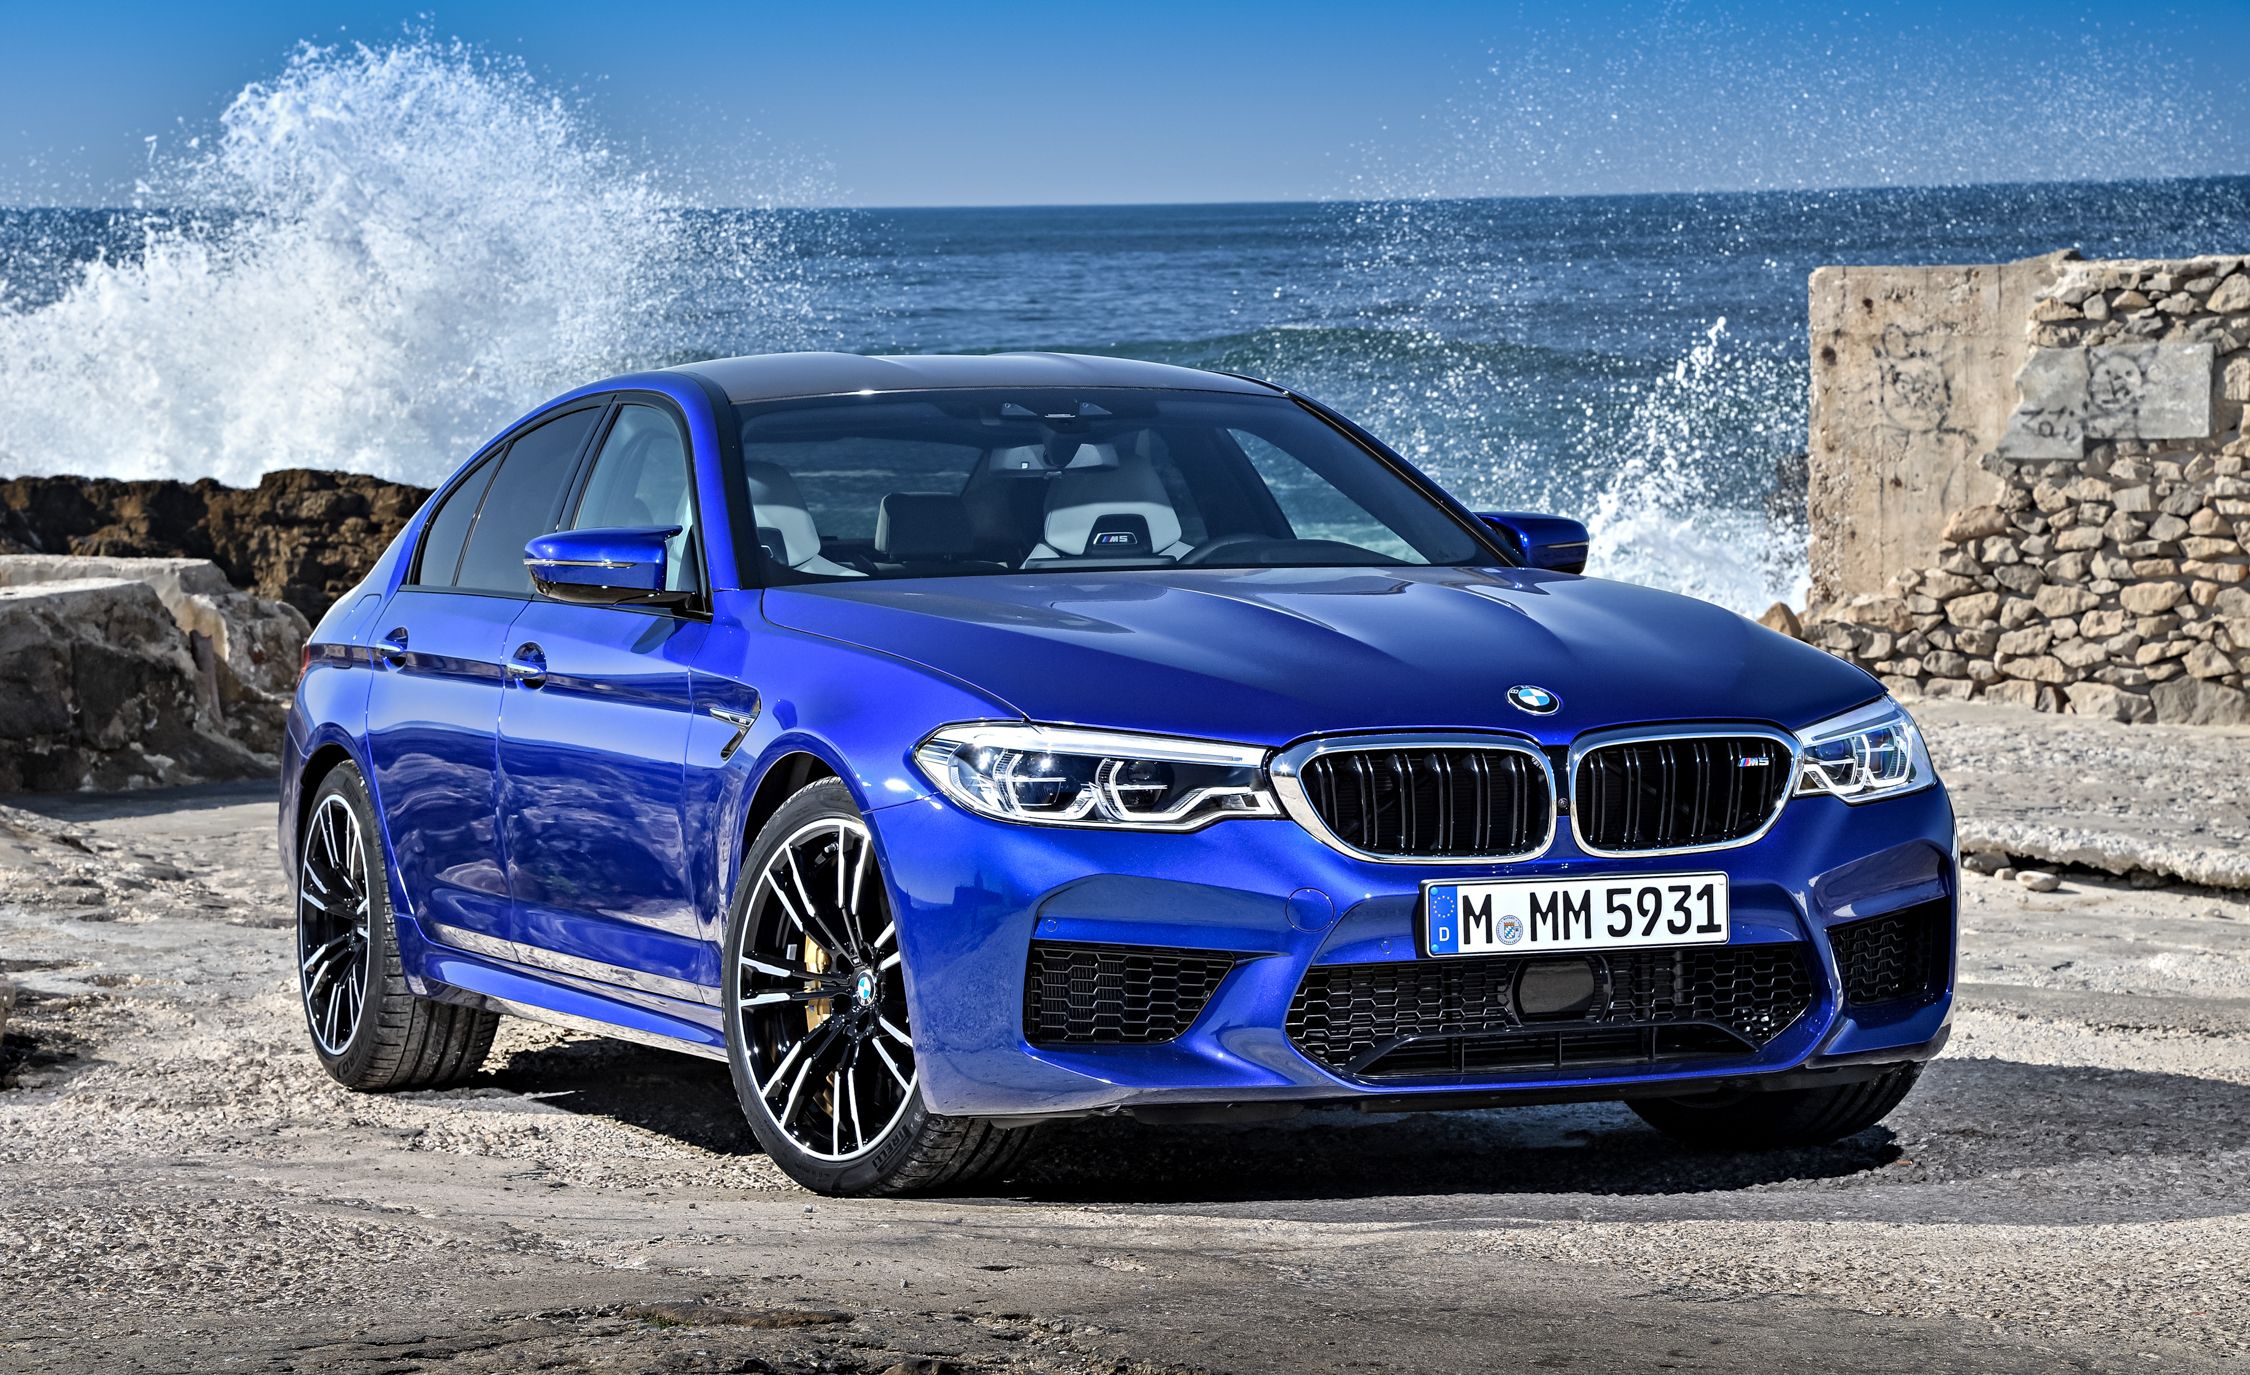 THE M5. BMW 5 Series Sedan M Automobiles: Engines & Technical Data